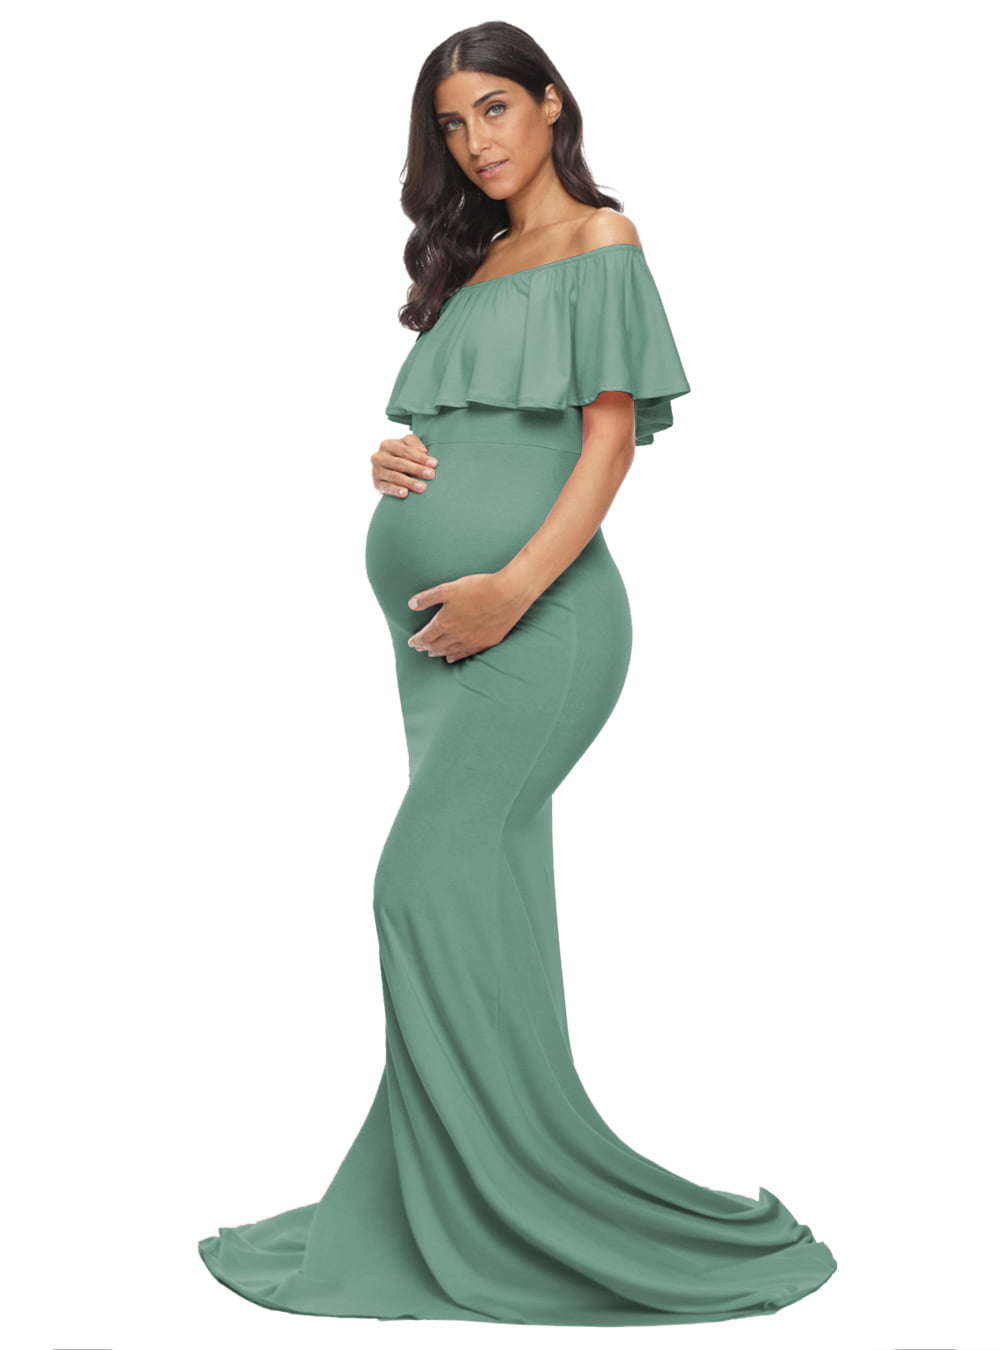 Ecavus Womens Off Shoulder Maternity Dress Ruffle Trim Maxi Photography Dress for Baby Shower 